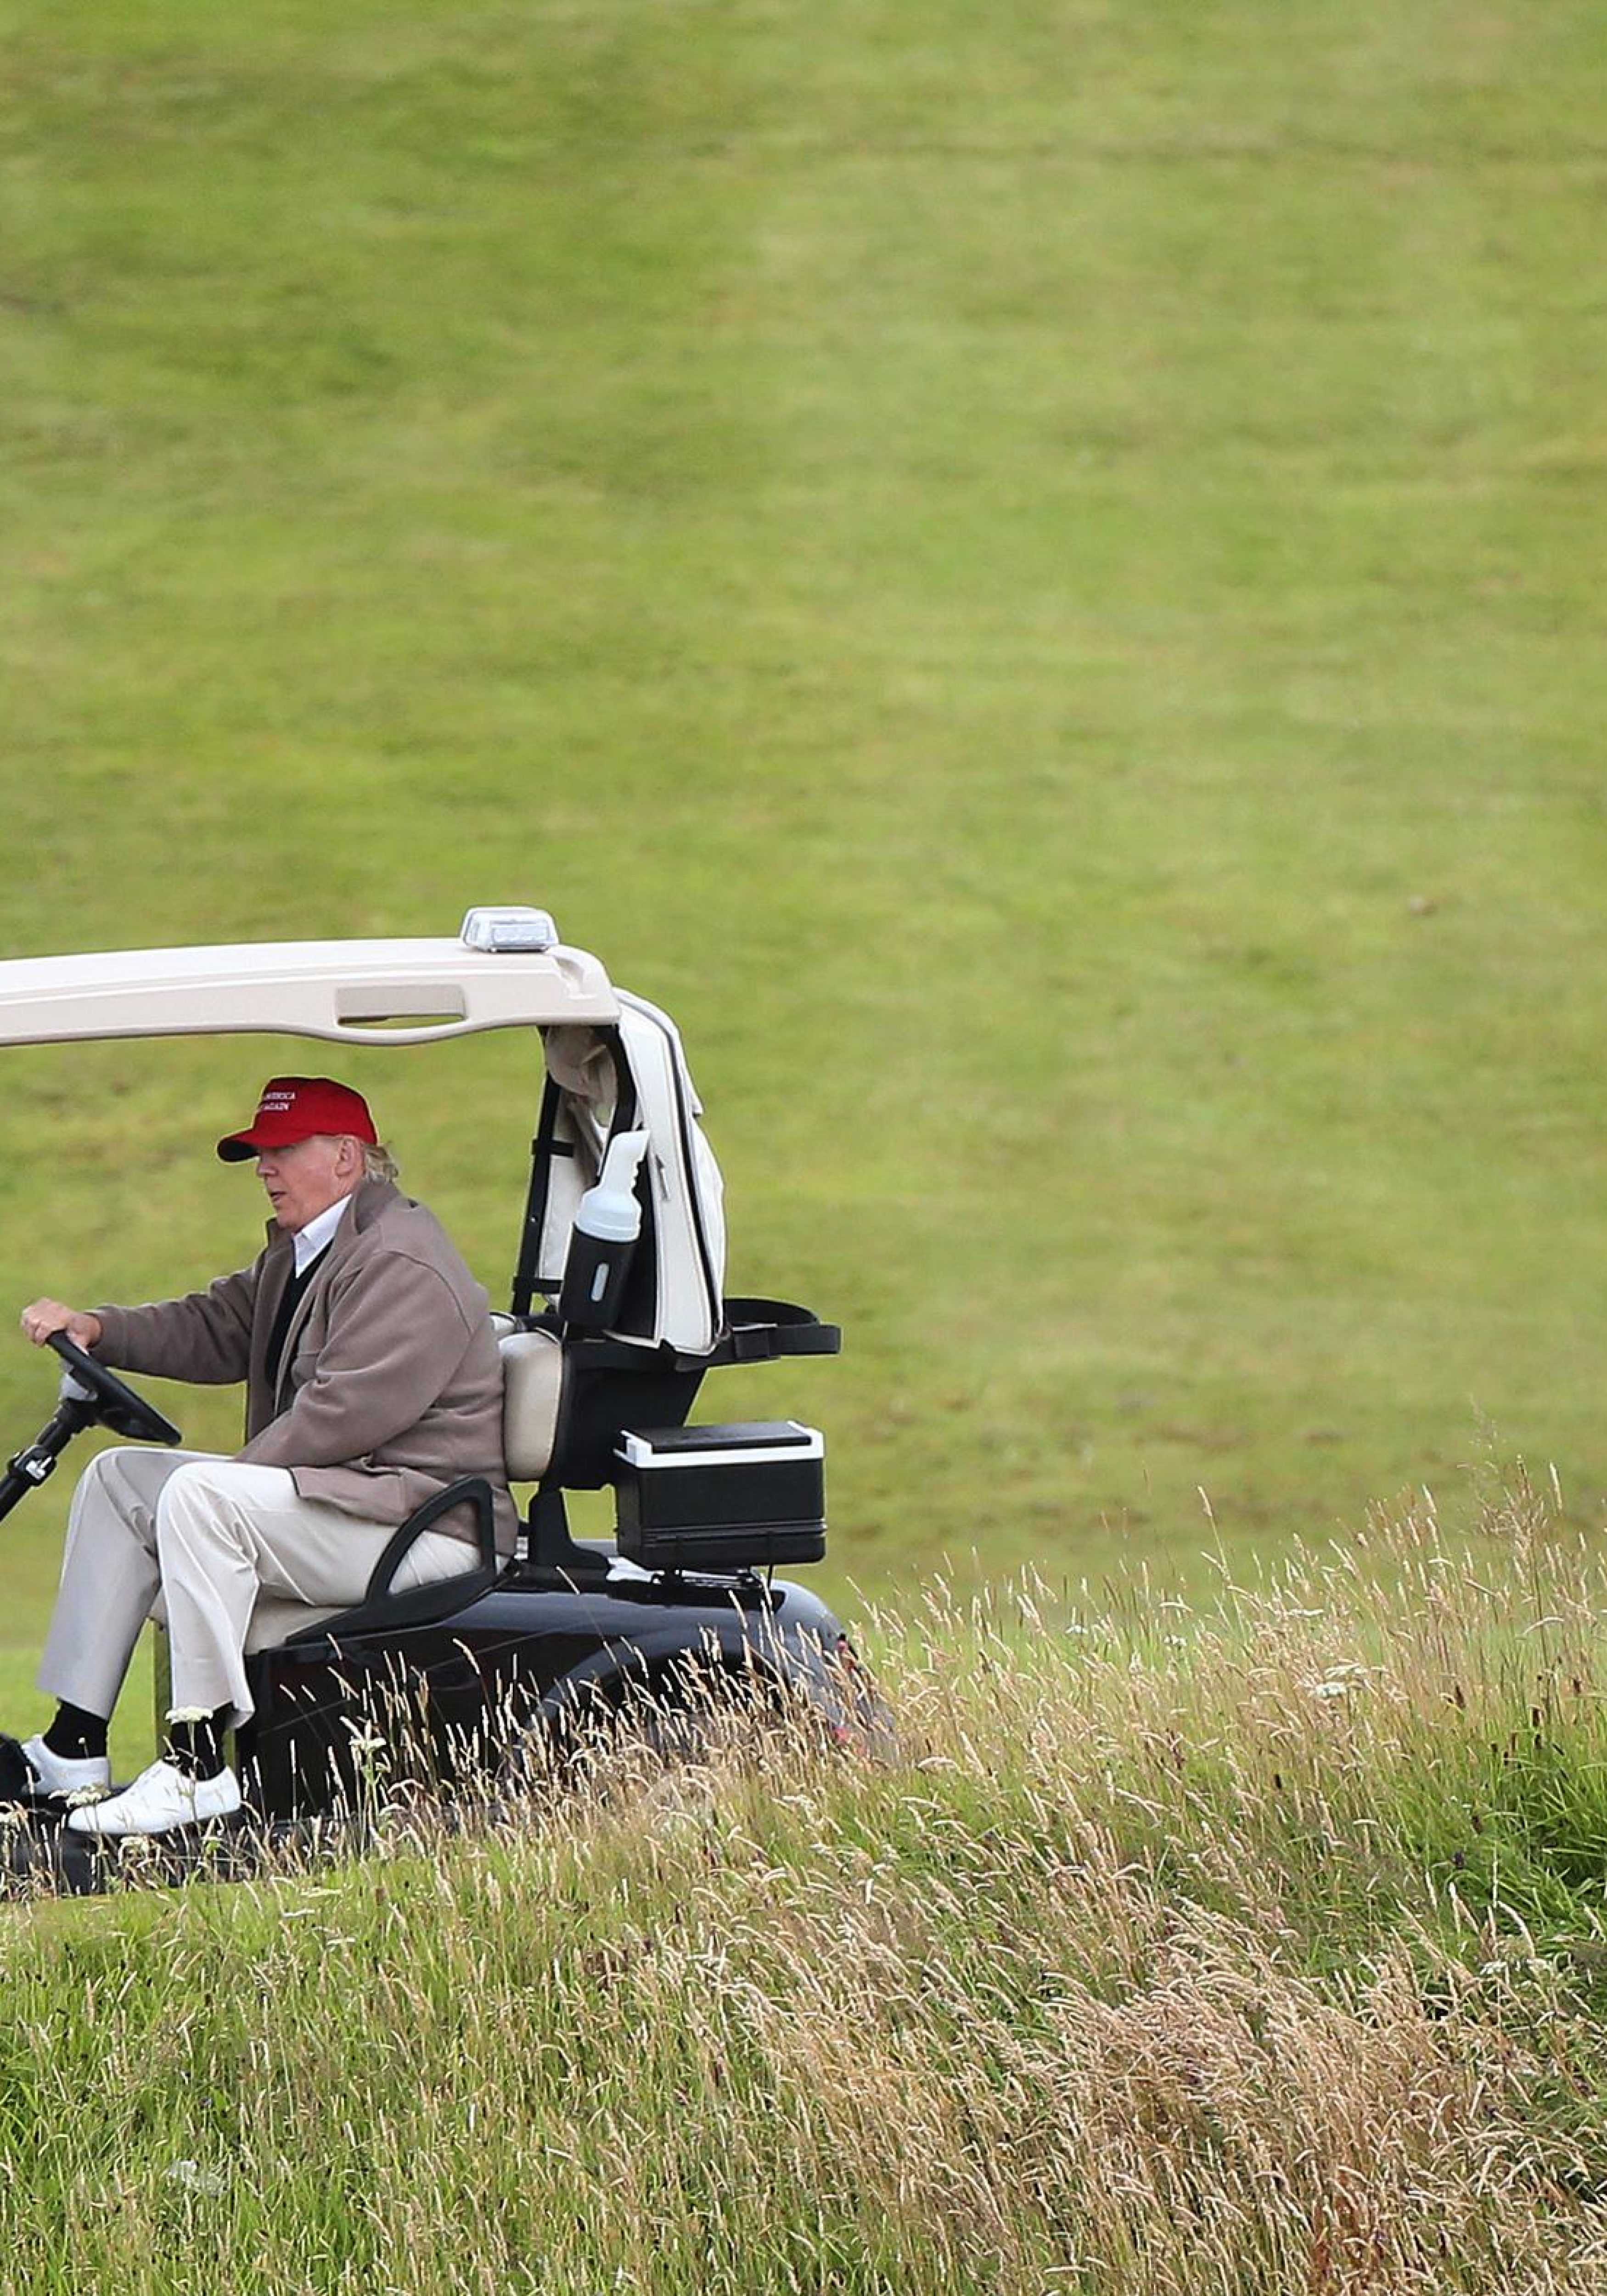 Donald-Trump-golf-course-global-warming-3500x5000.jpg